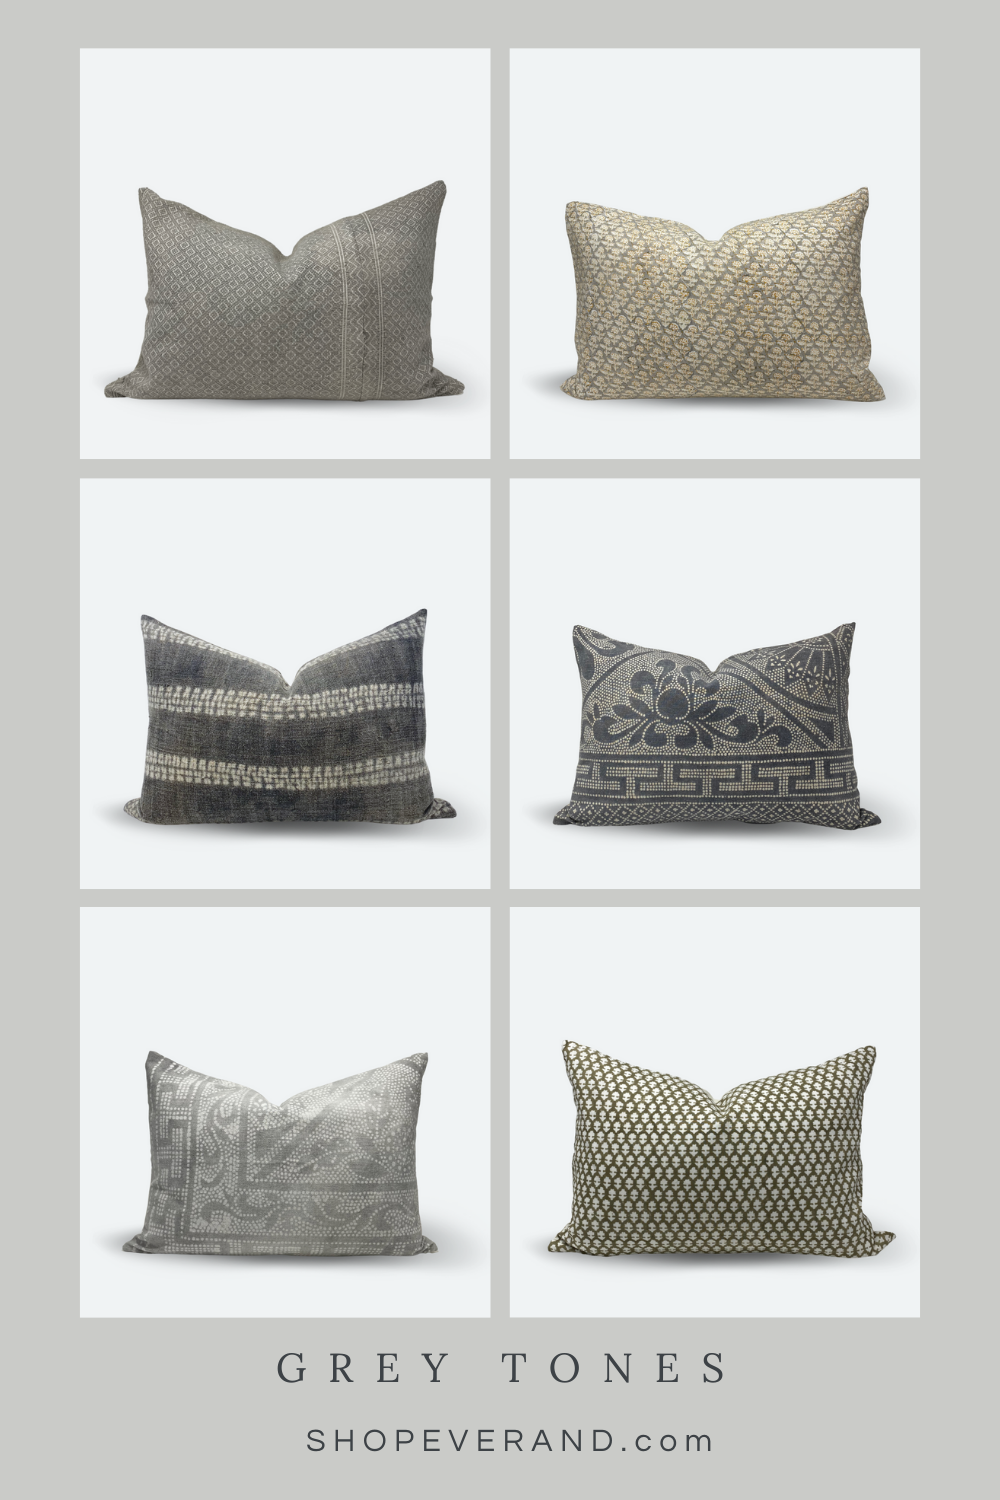 Everand grey tone throw pillows for spring